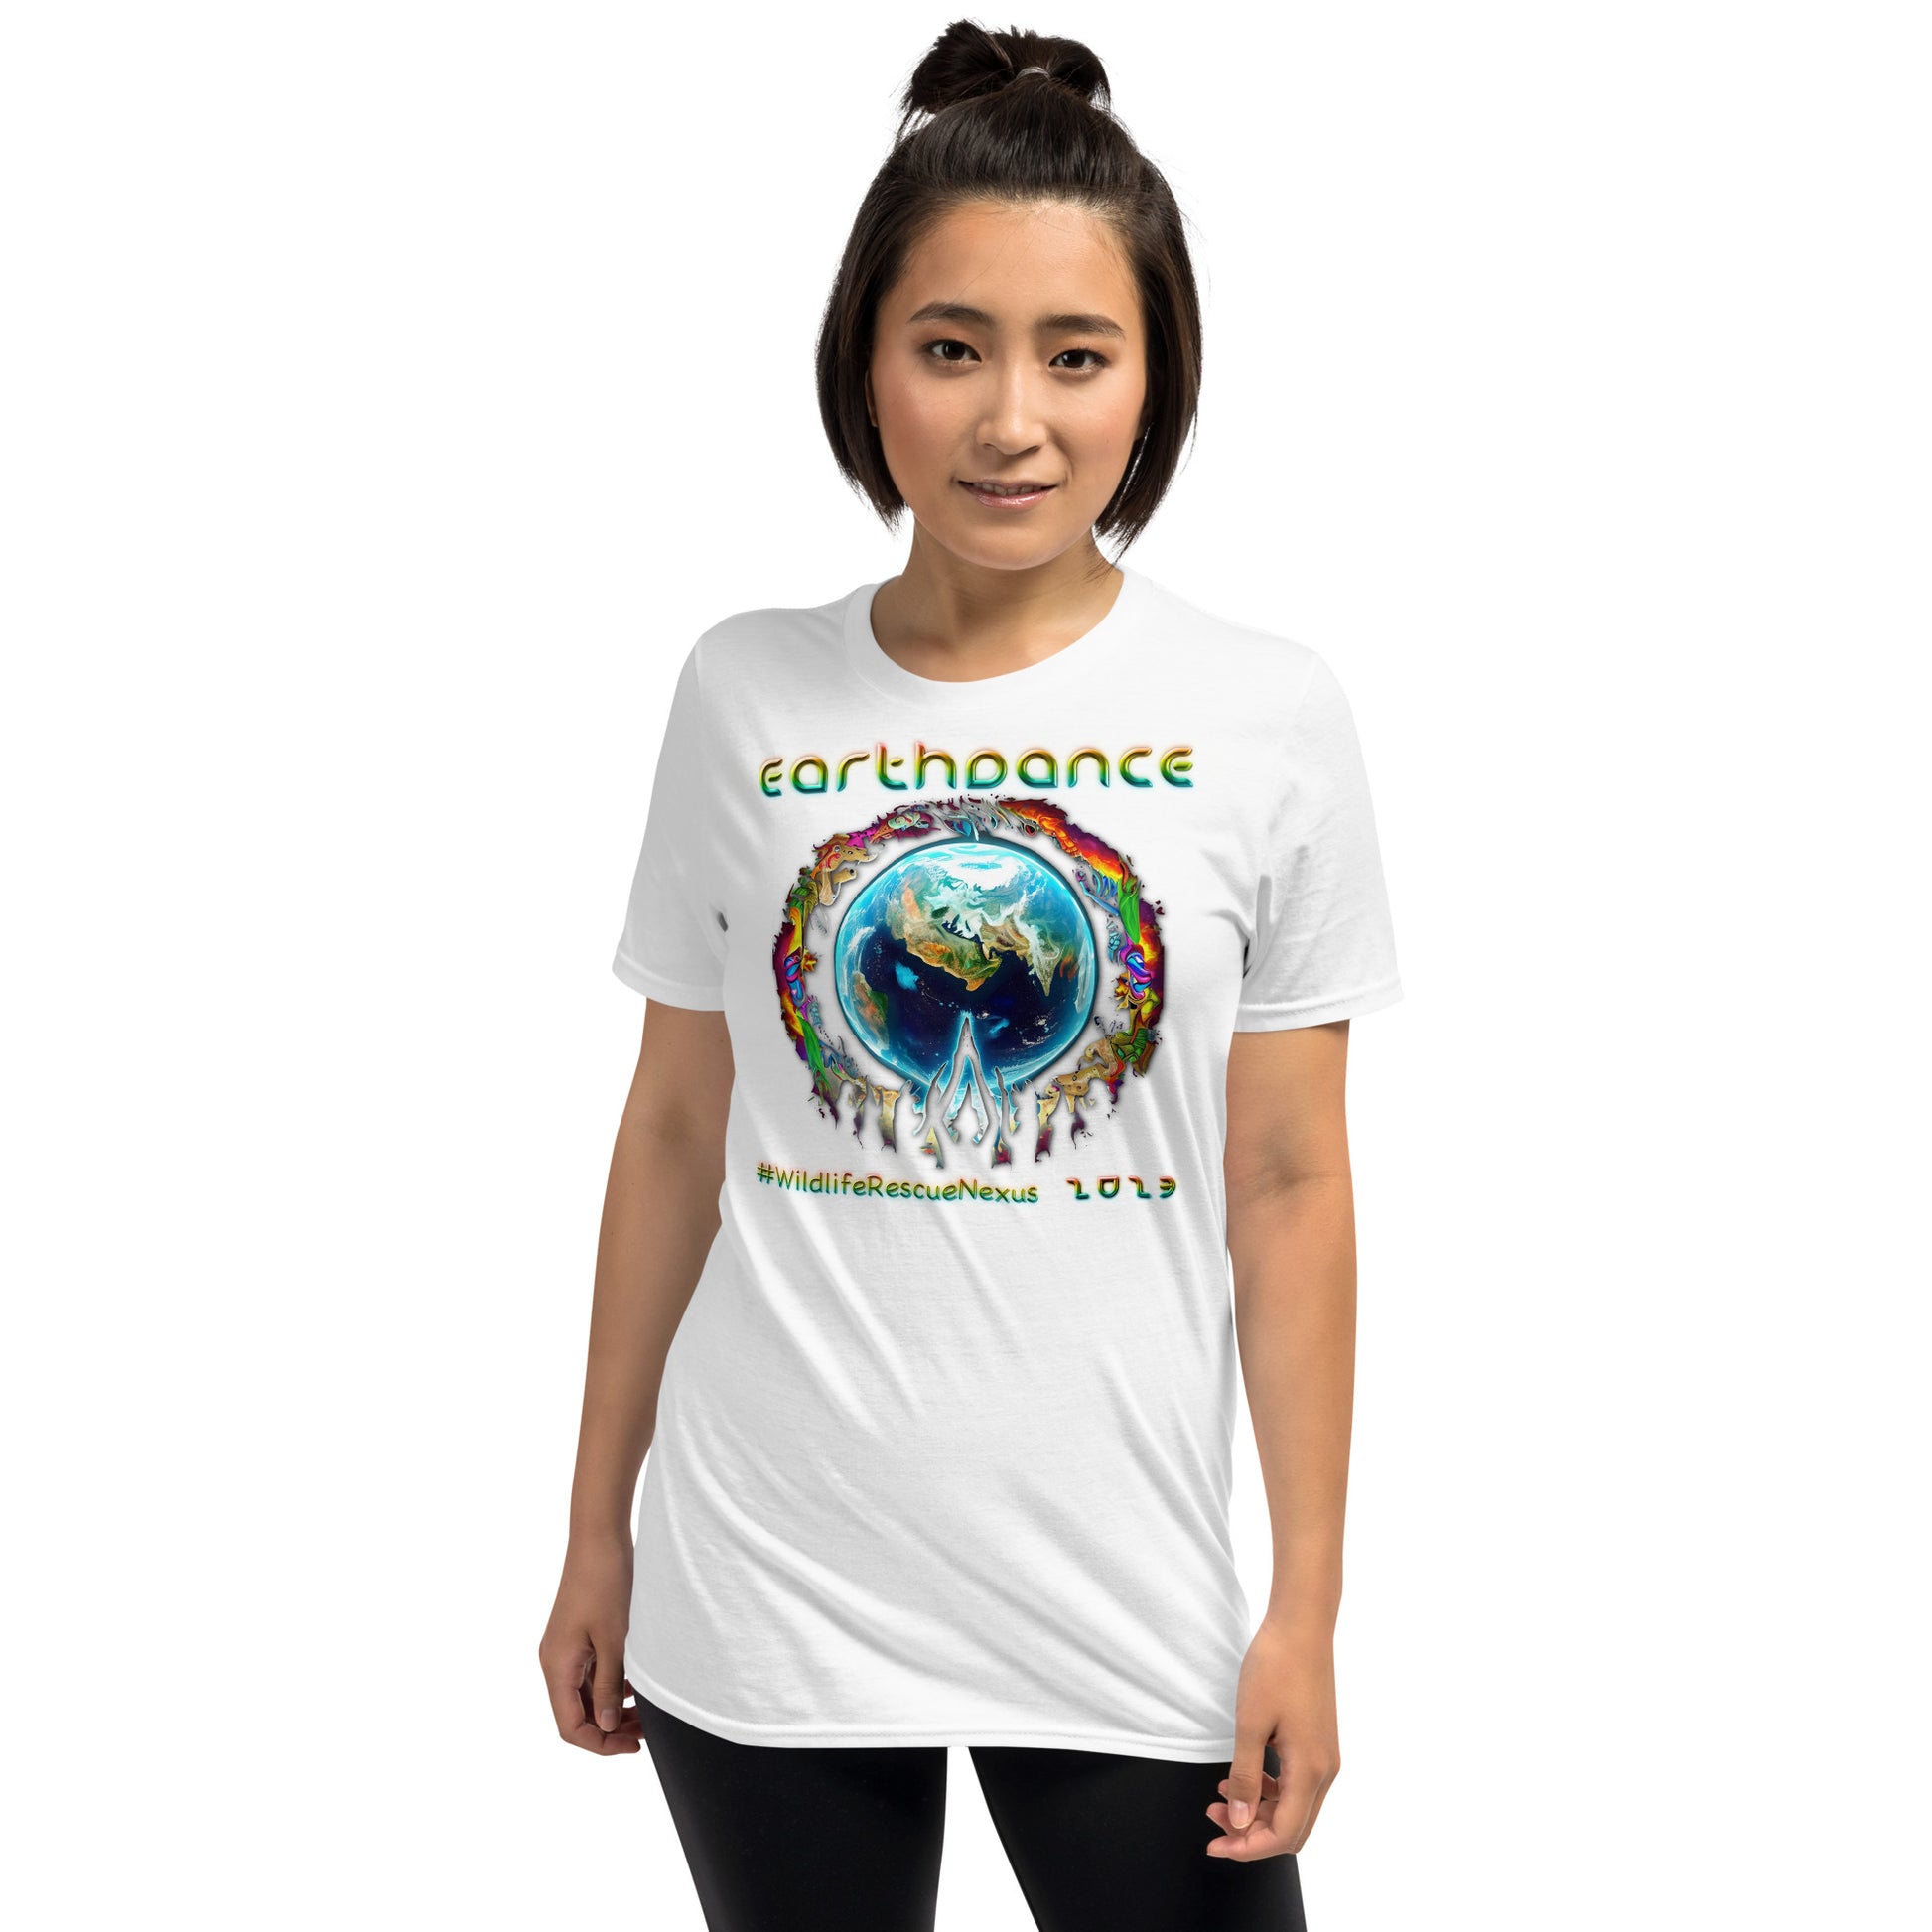 Earthdance 2023 - AuraShine v1 - Limited Edition - Short-Sleeve Unisex T-Shirt - The Foundation of Families